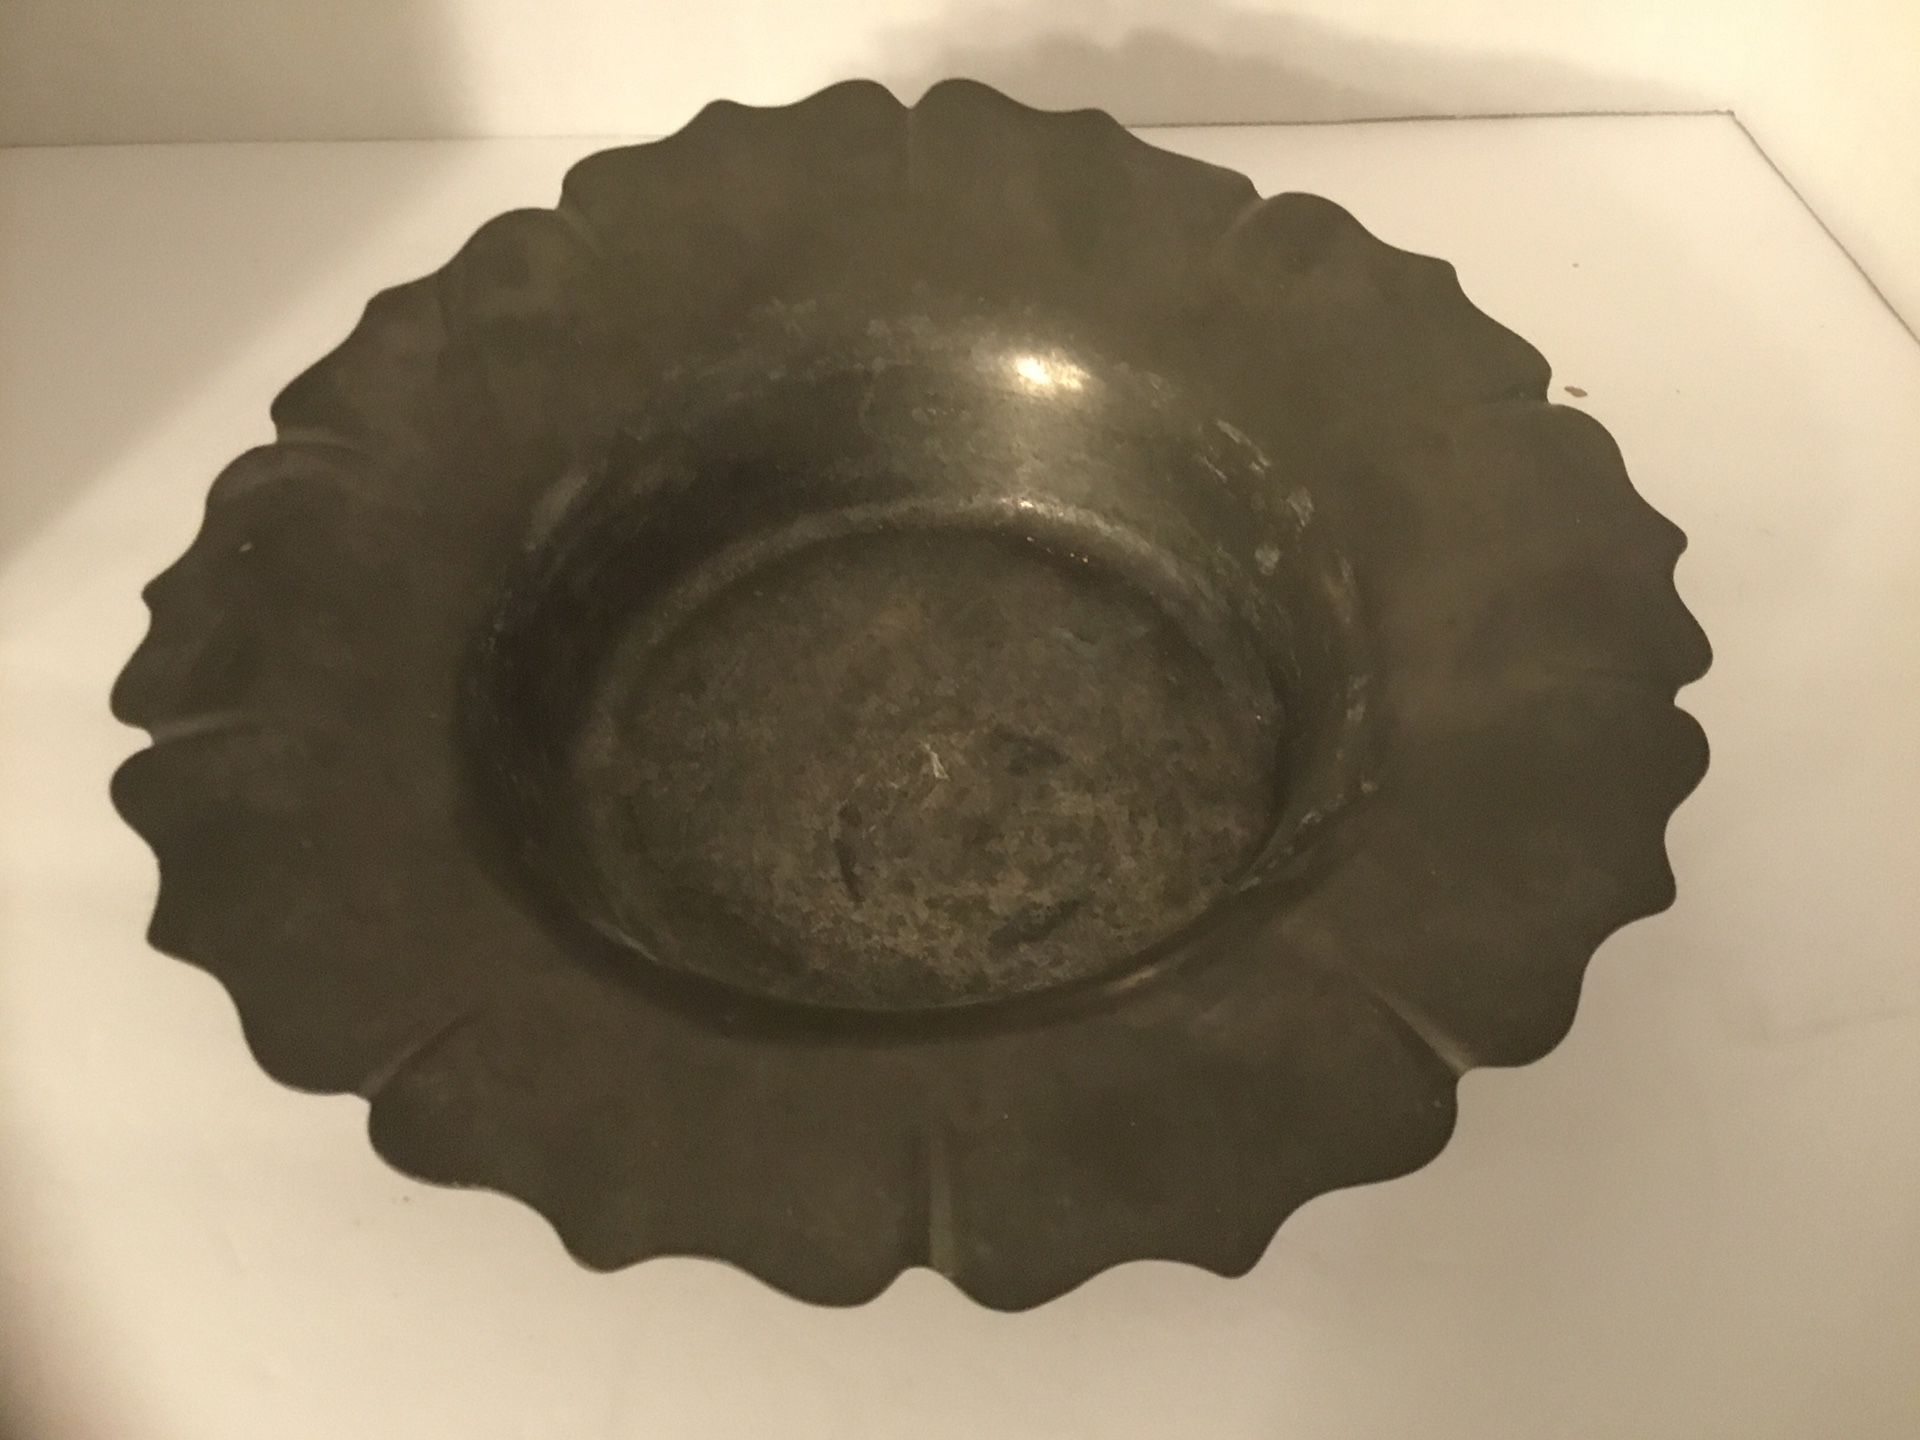 100% Genuine Estate Antique Pewter Kitchenware - 19th Century - Cup, Tray, Platter